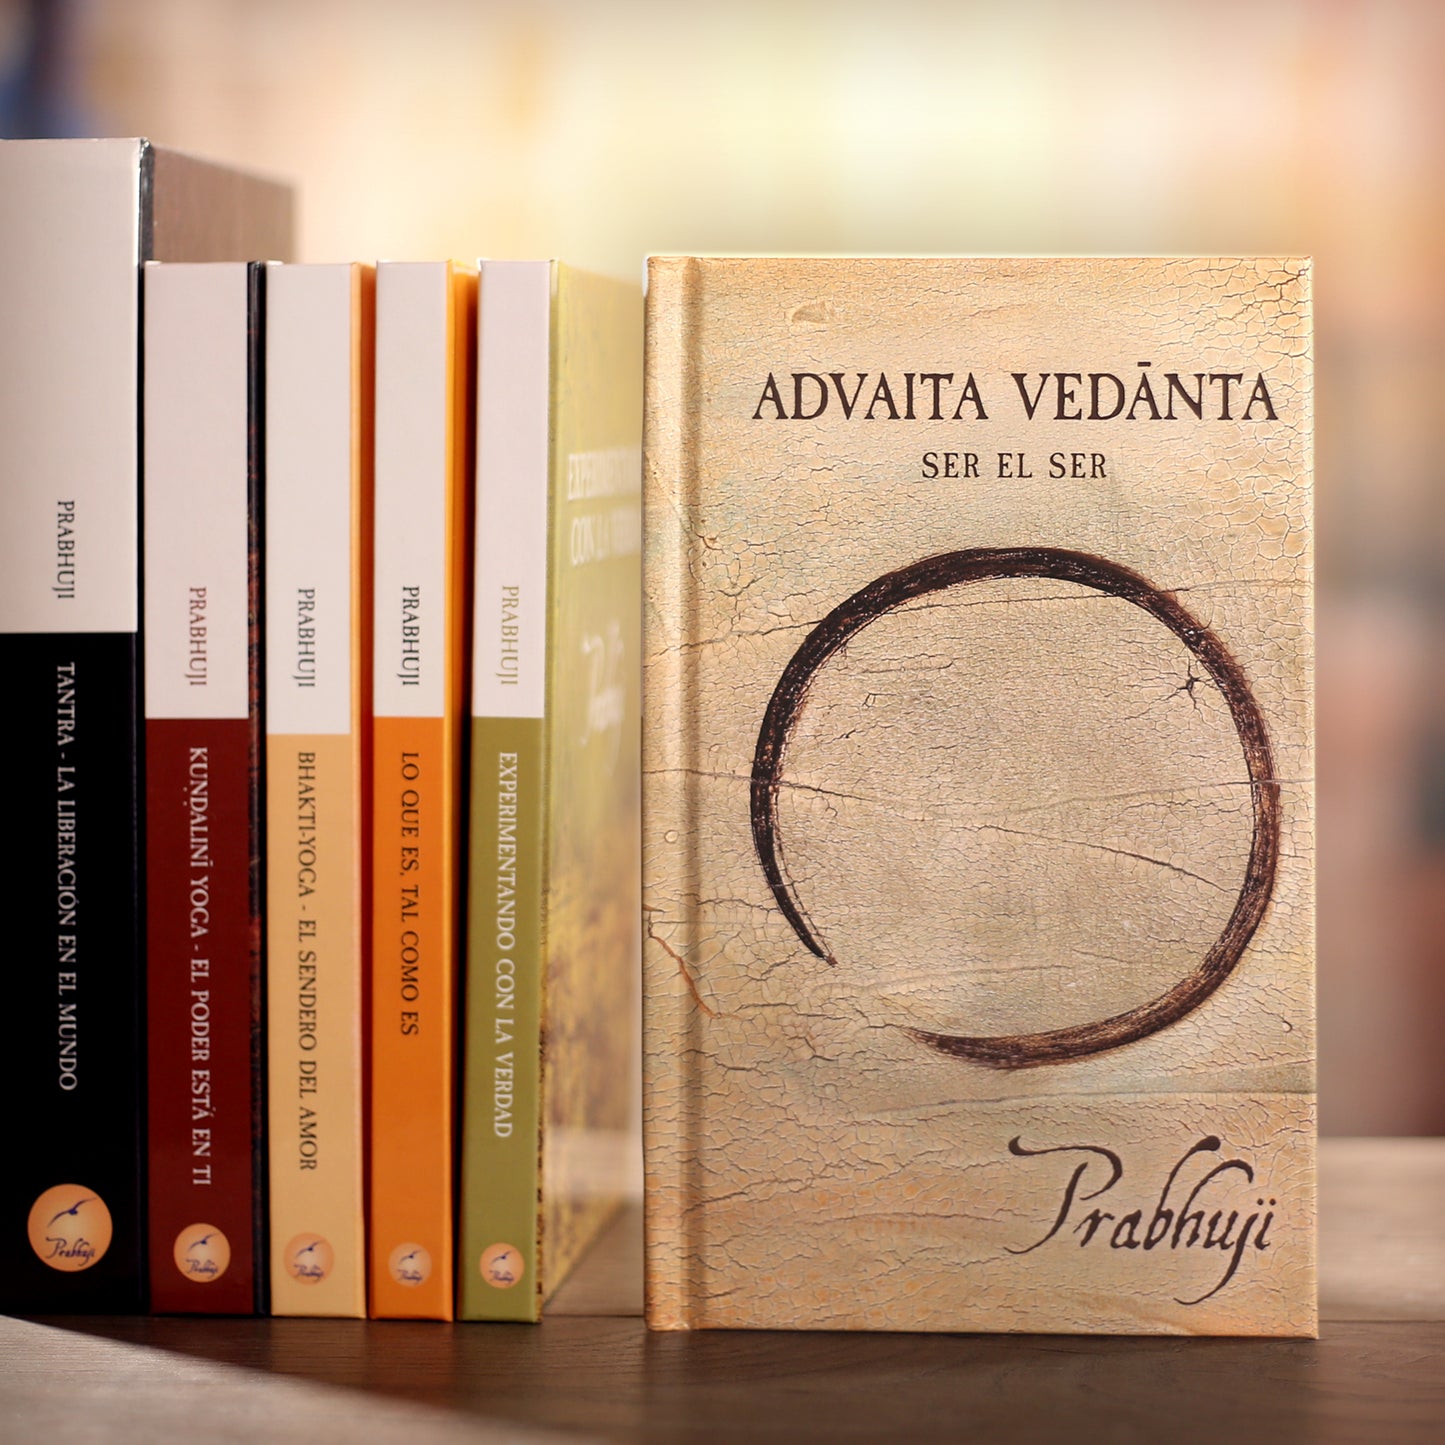 Libro Advaita Vedanta - Ser el ser con Prabhuji (Hard cover - Spanish)